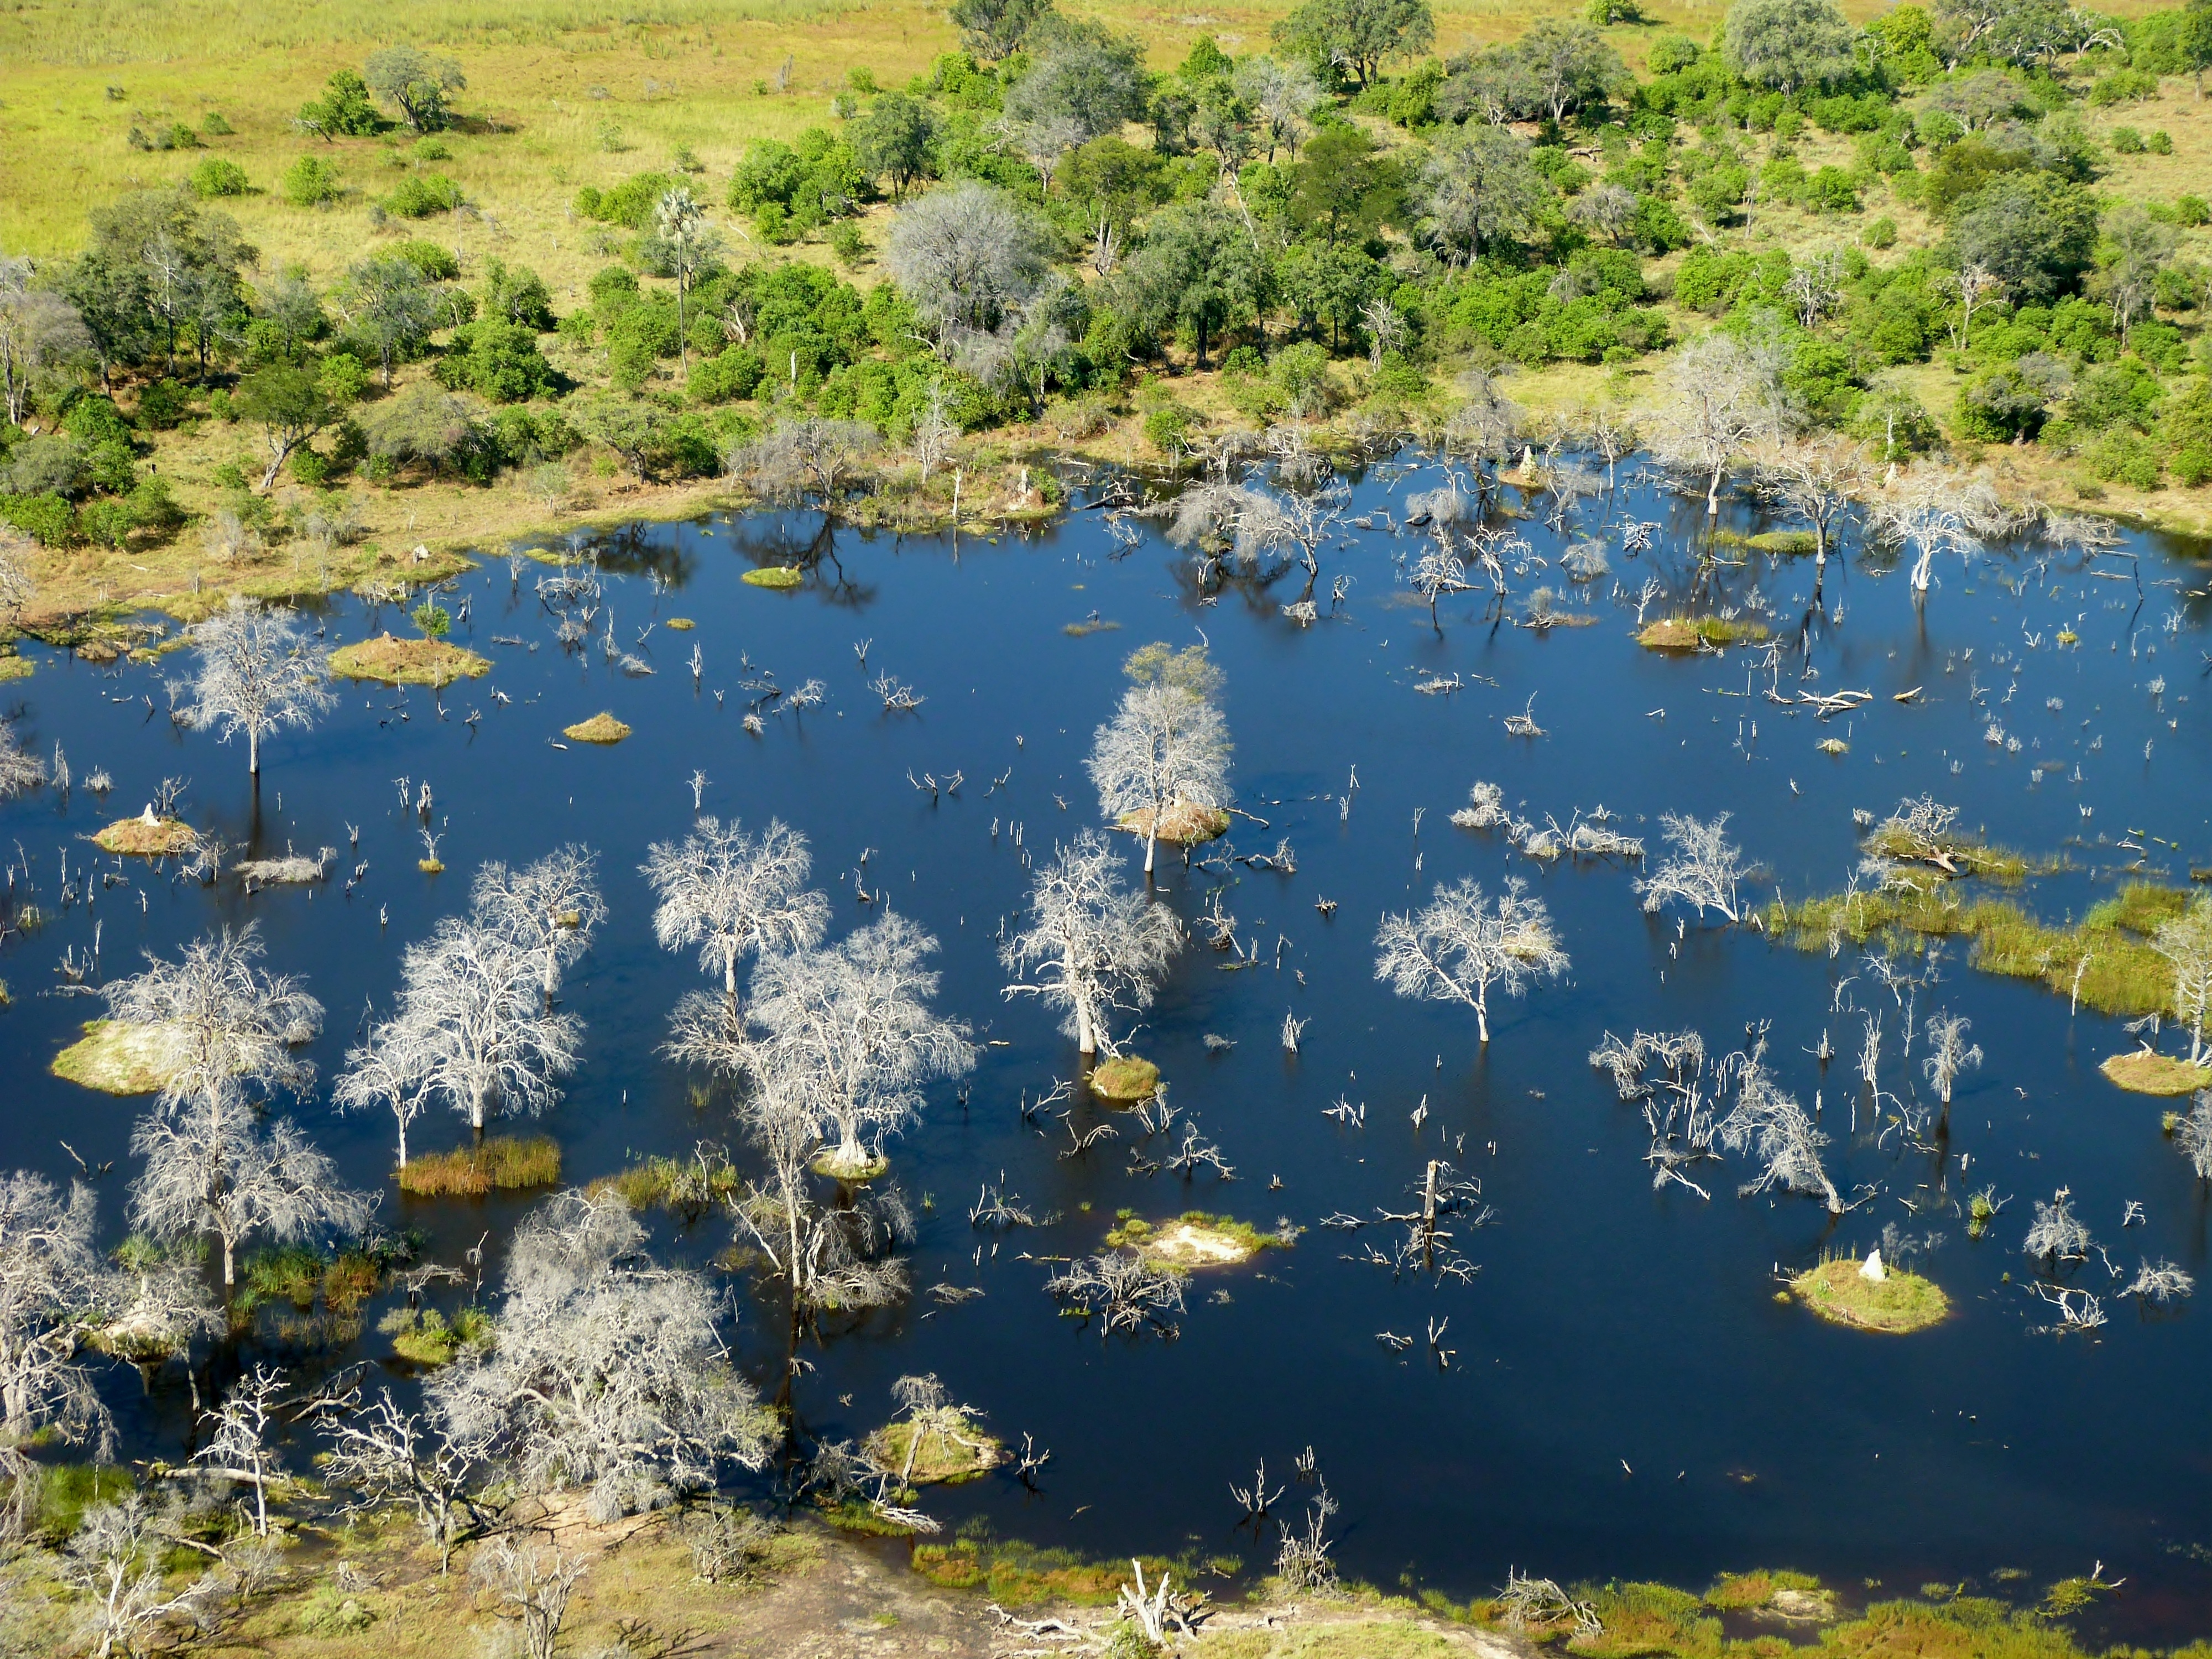 Okavango (delta)